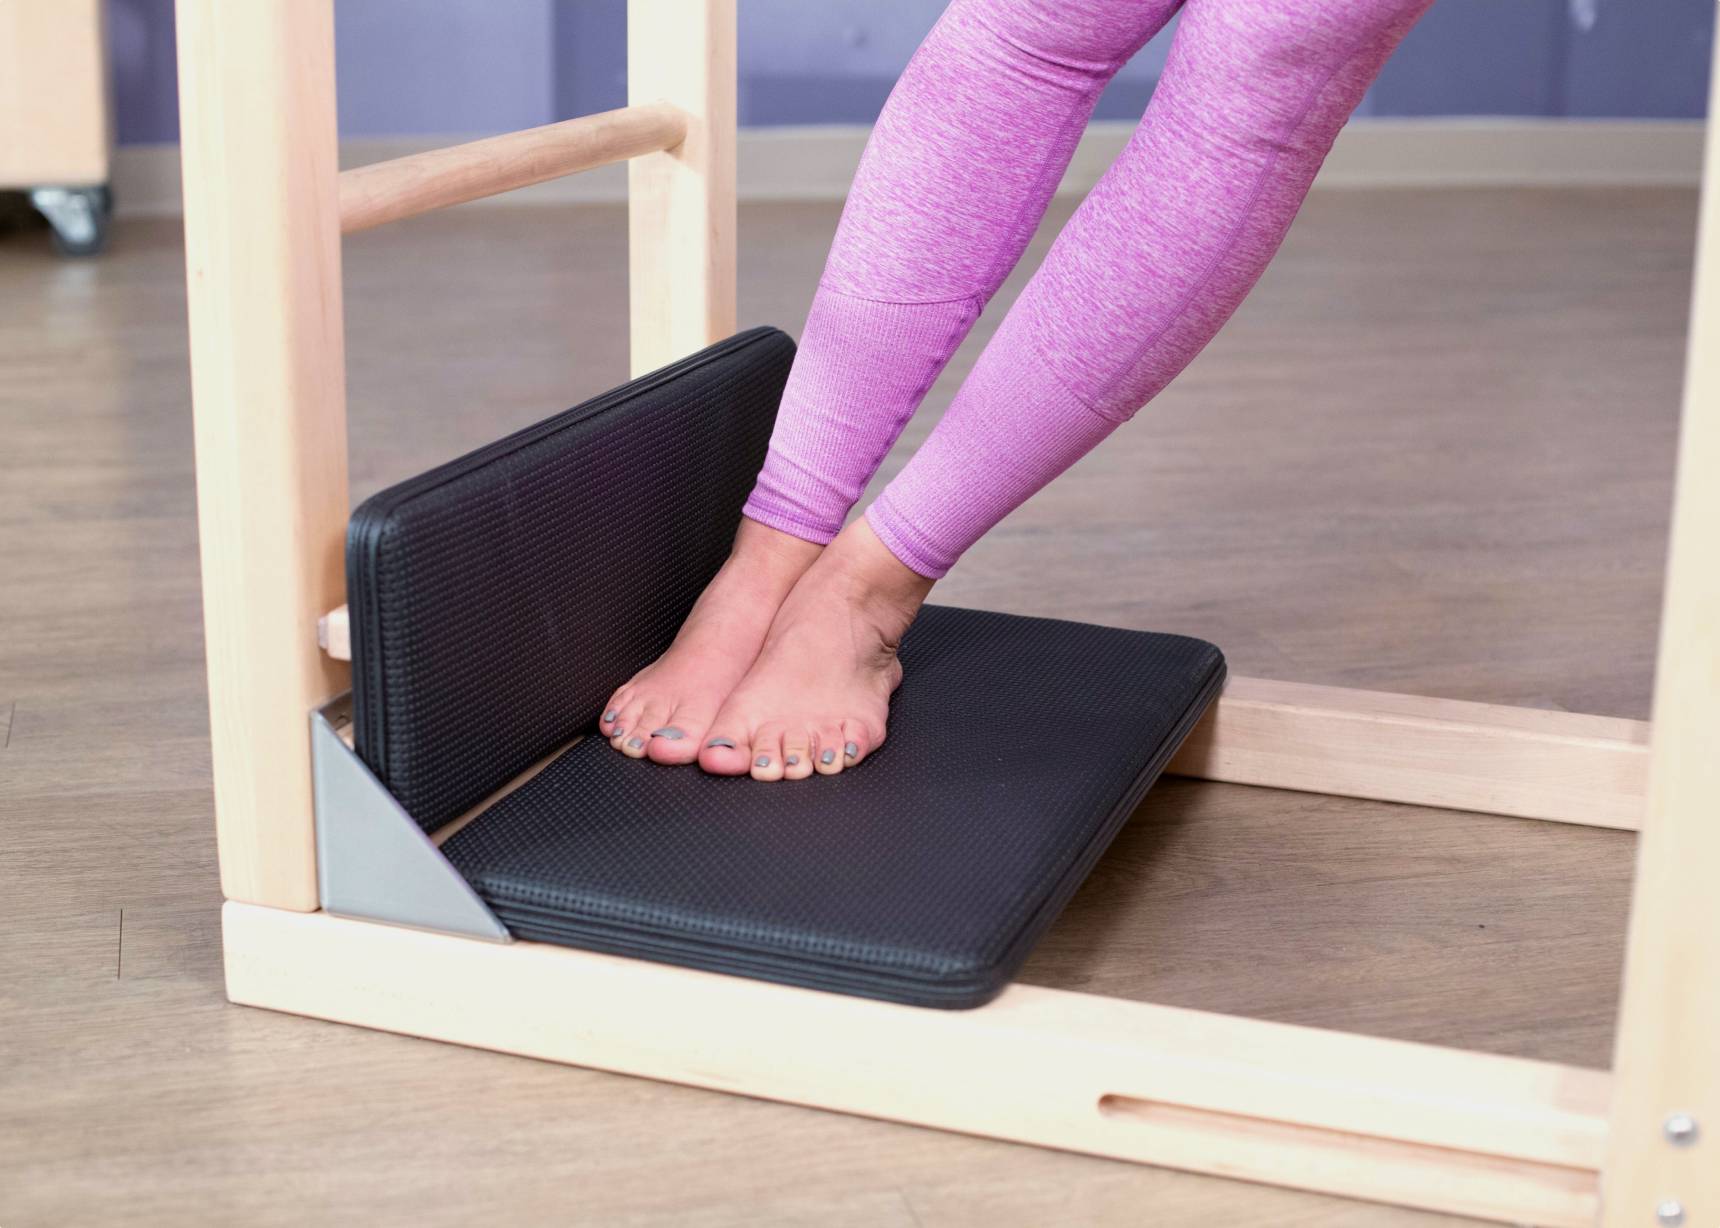 Pilates Ladder Barrel : How it helps improve core stabilization - Atlanta PT